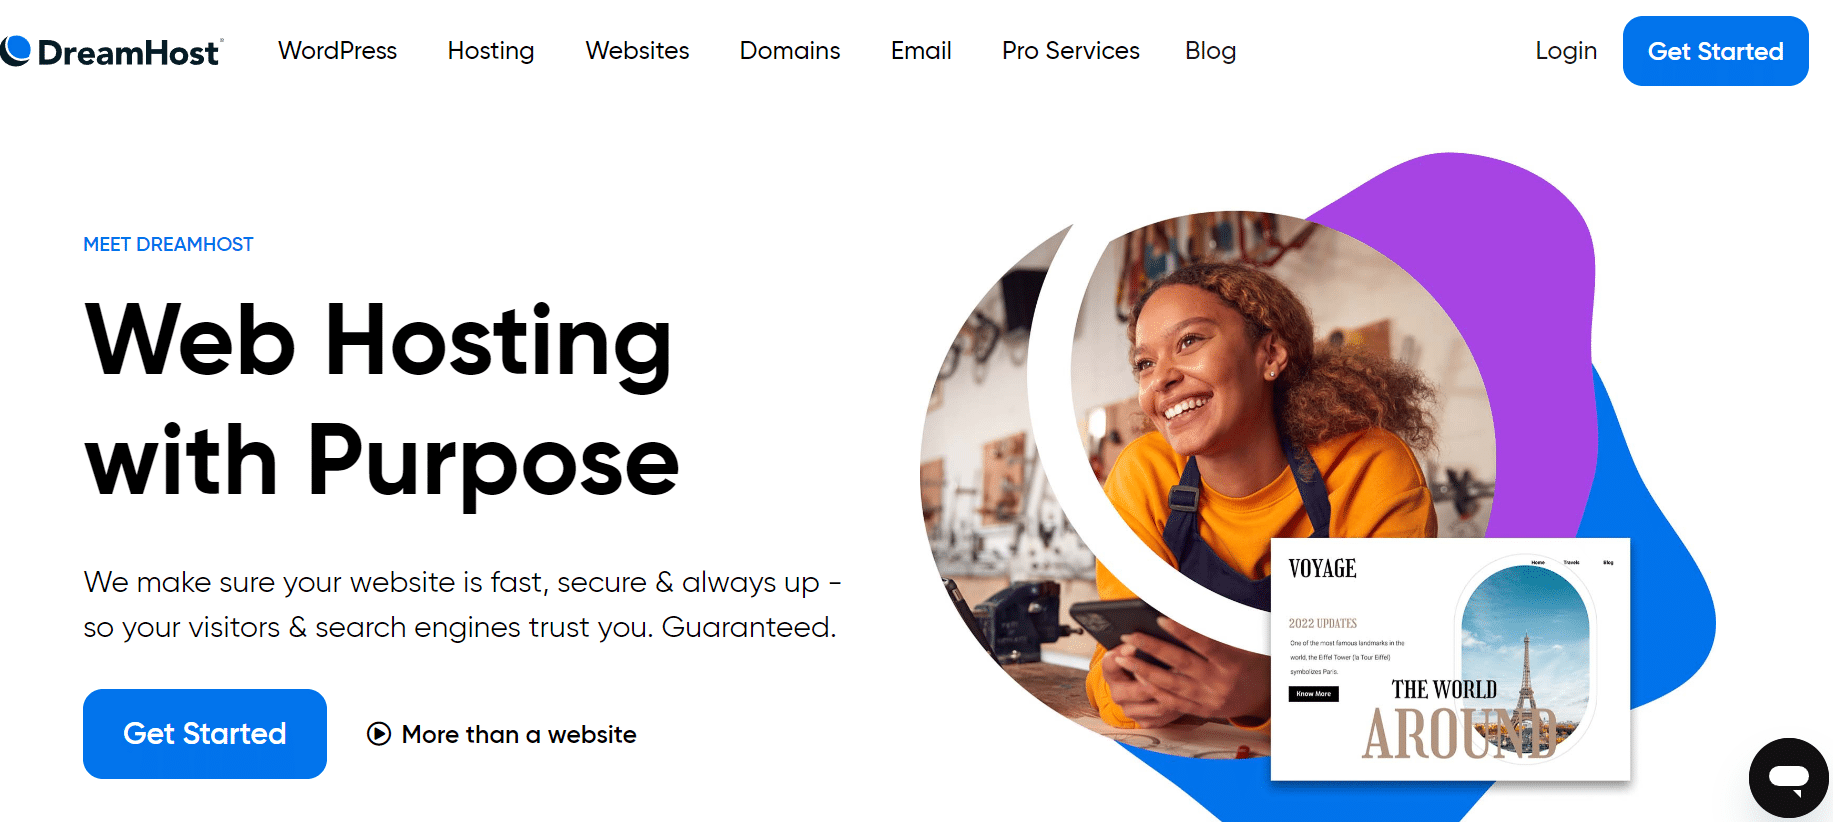 DreamHost's homepage